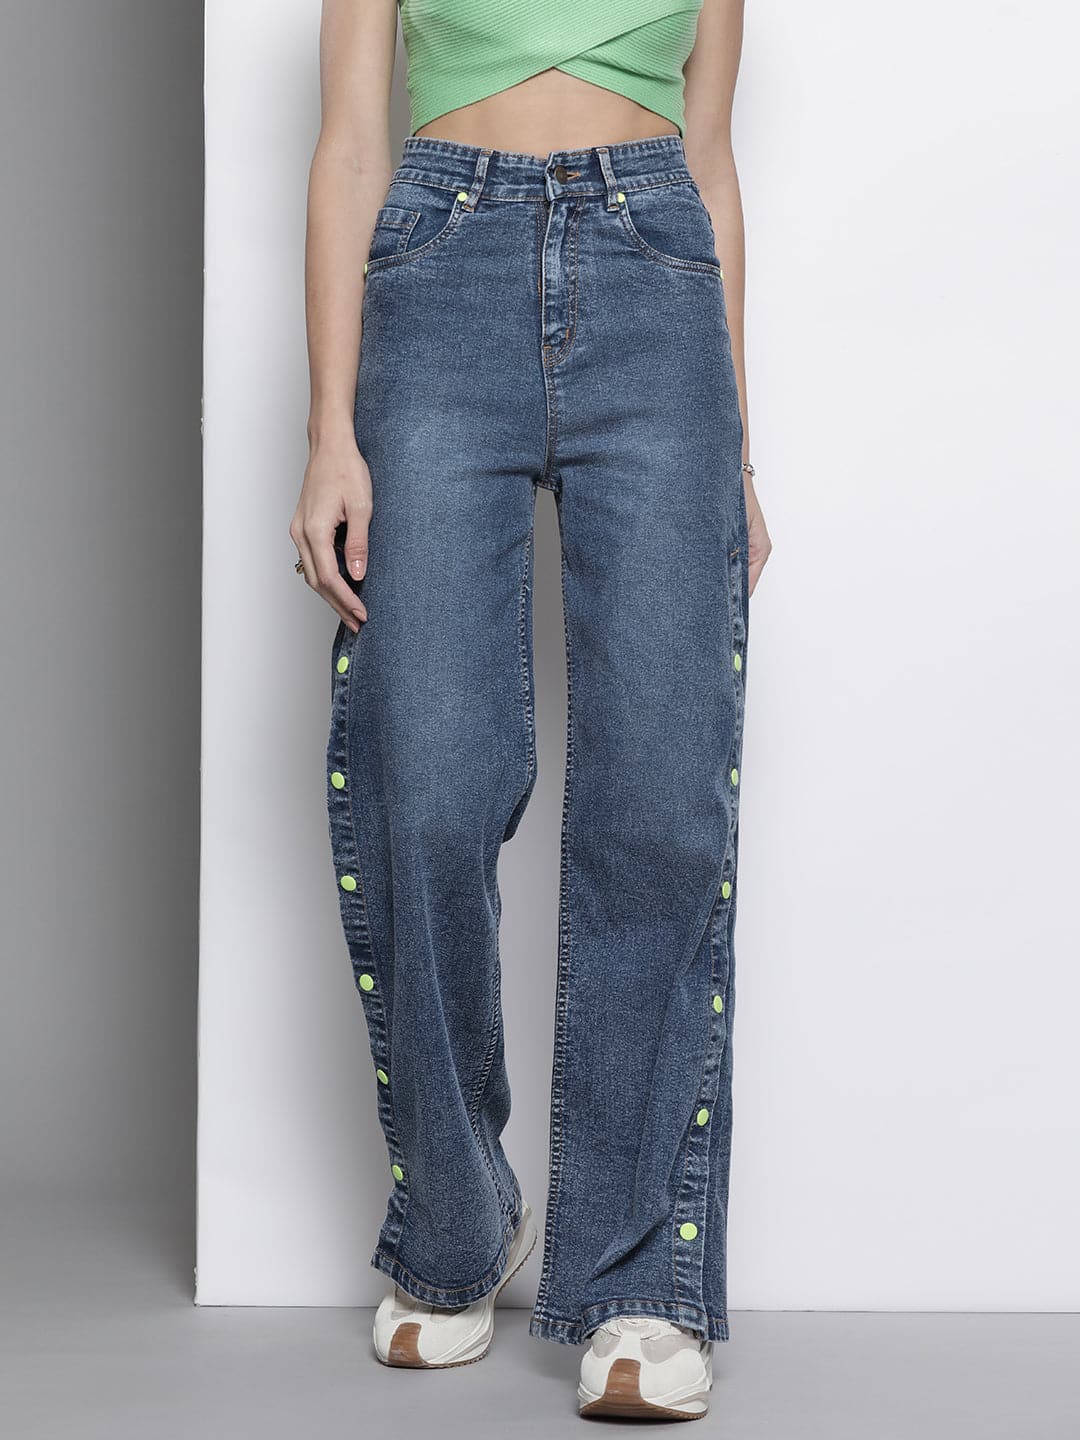 Buy Women's Stretch Denim Jeans Online